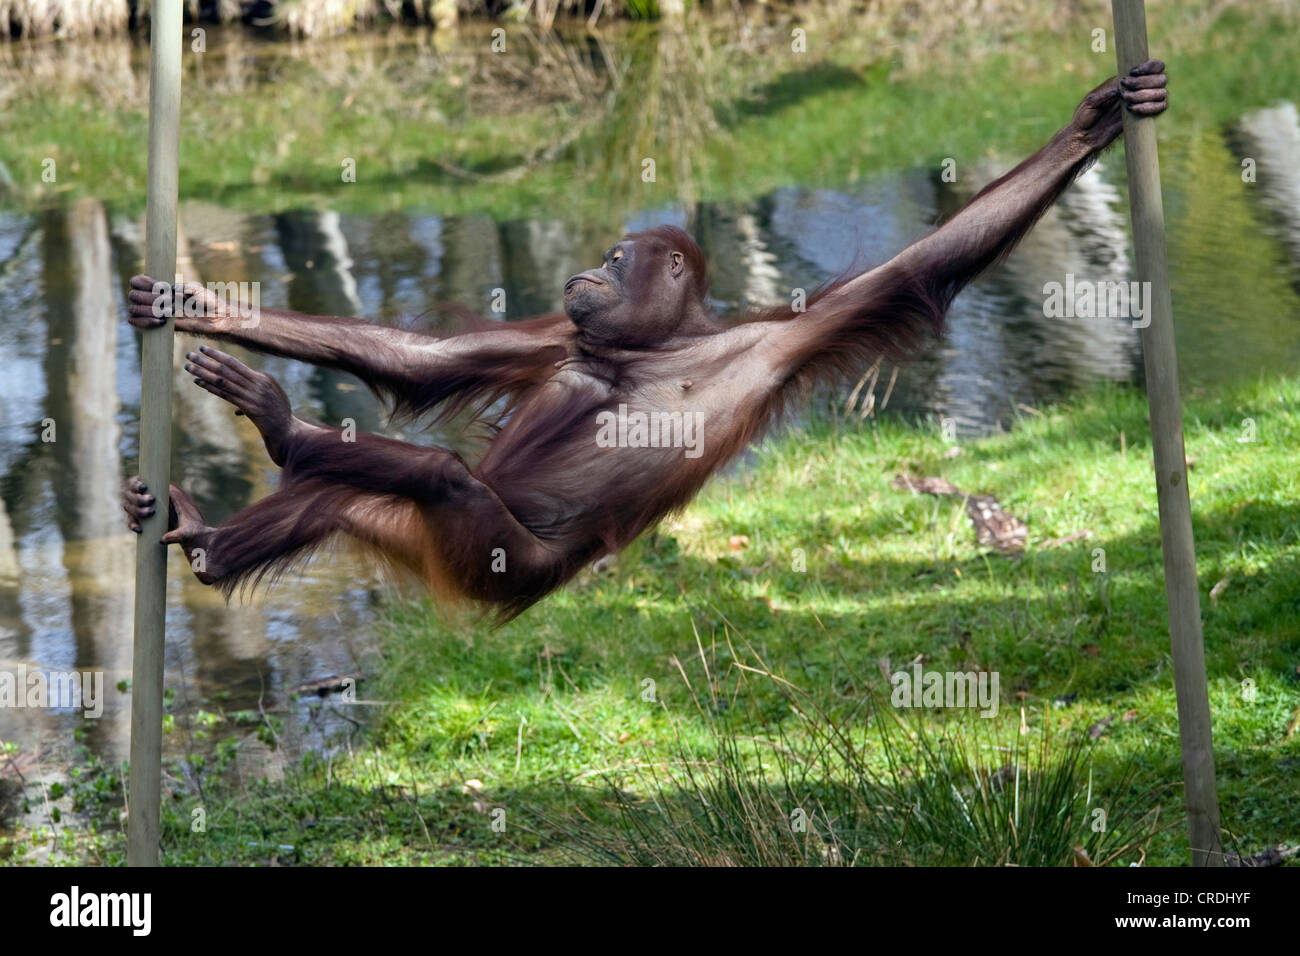 Bornean orangutan (Pongo pygmaeus pygmaeus), climbing at monkey bars, Netherlands, Apenheul, Apeldorn Stock Photo